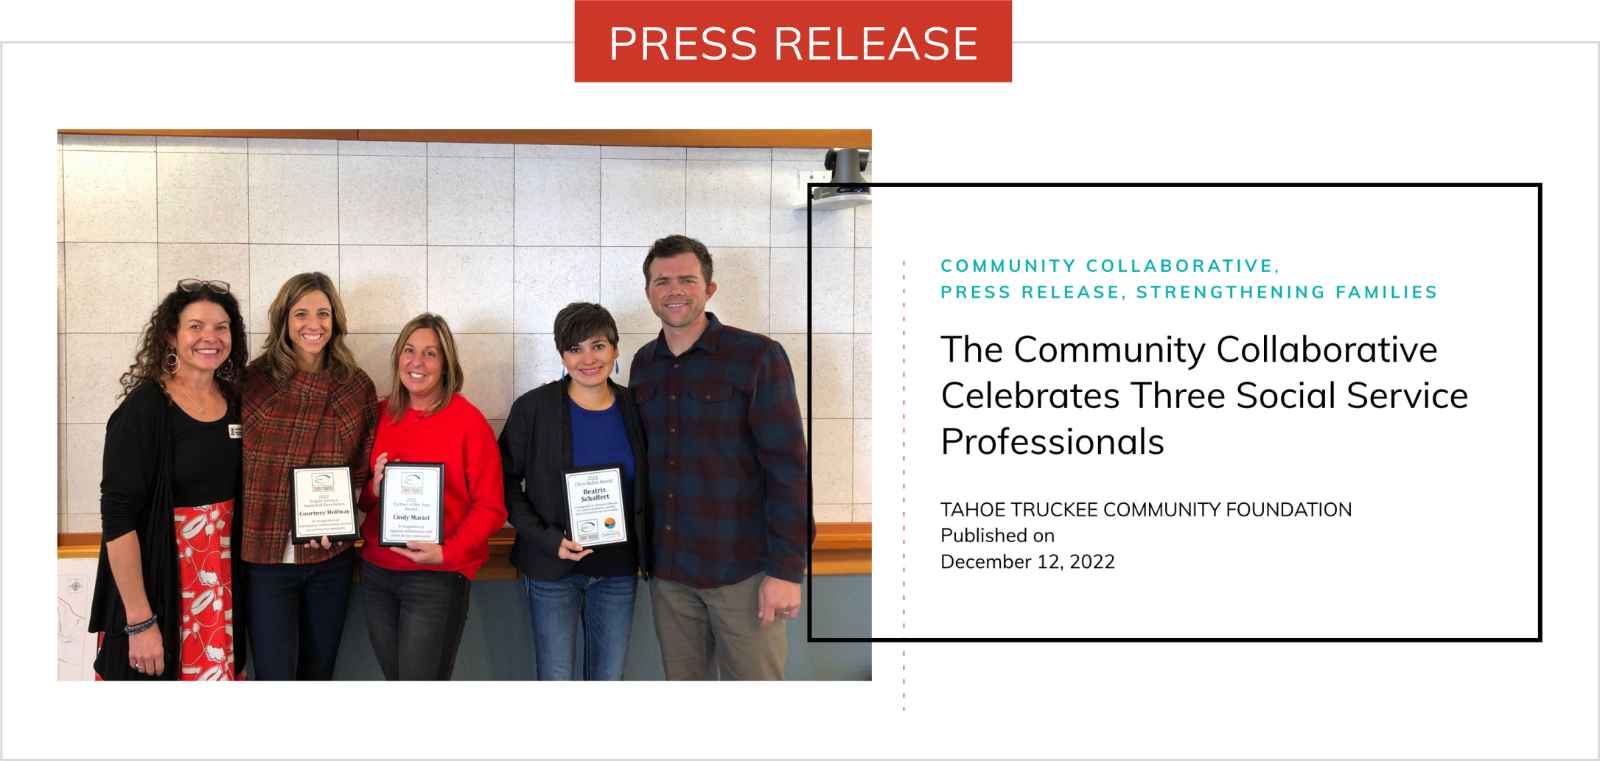 The Community Collaborative Celebrates Three Social Service Professionals